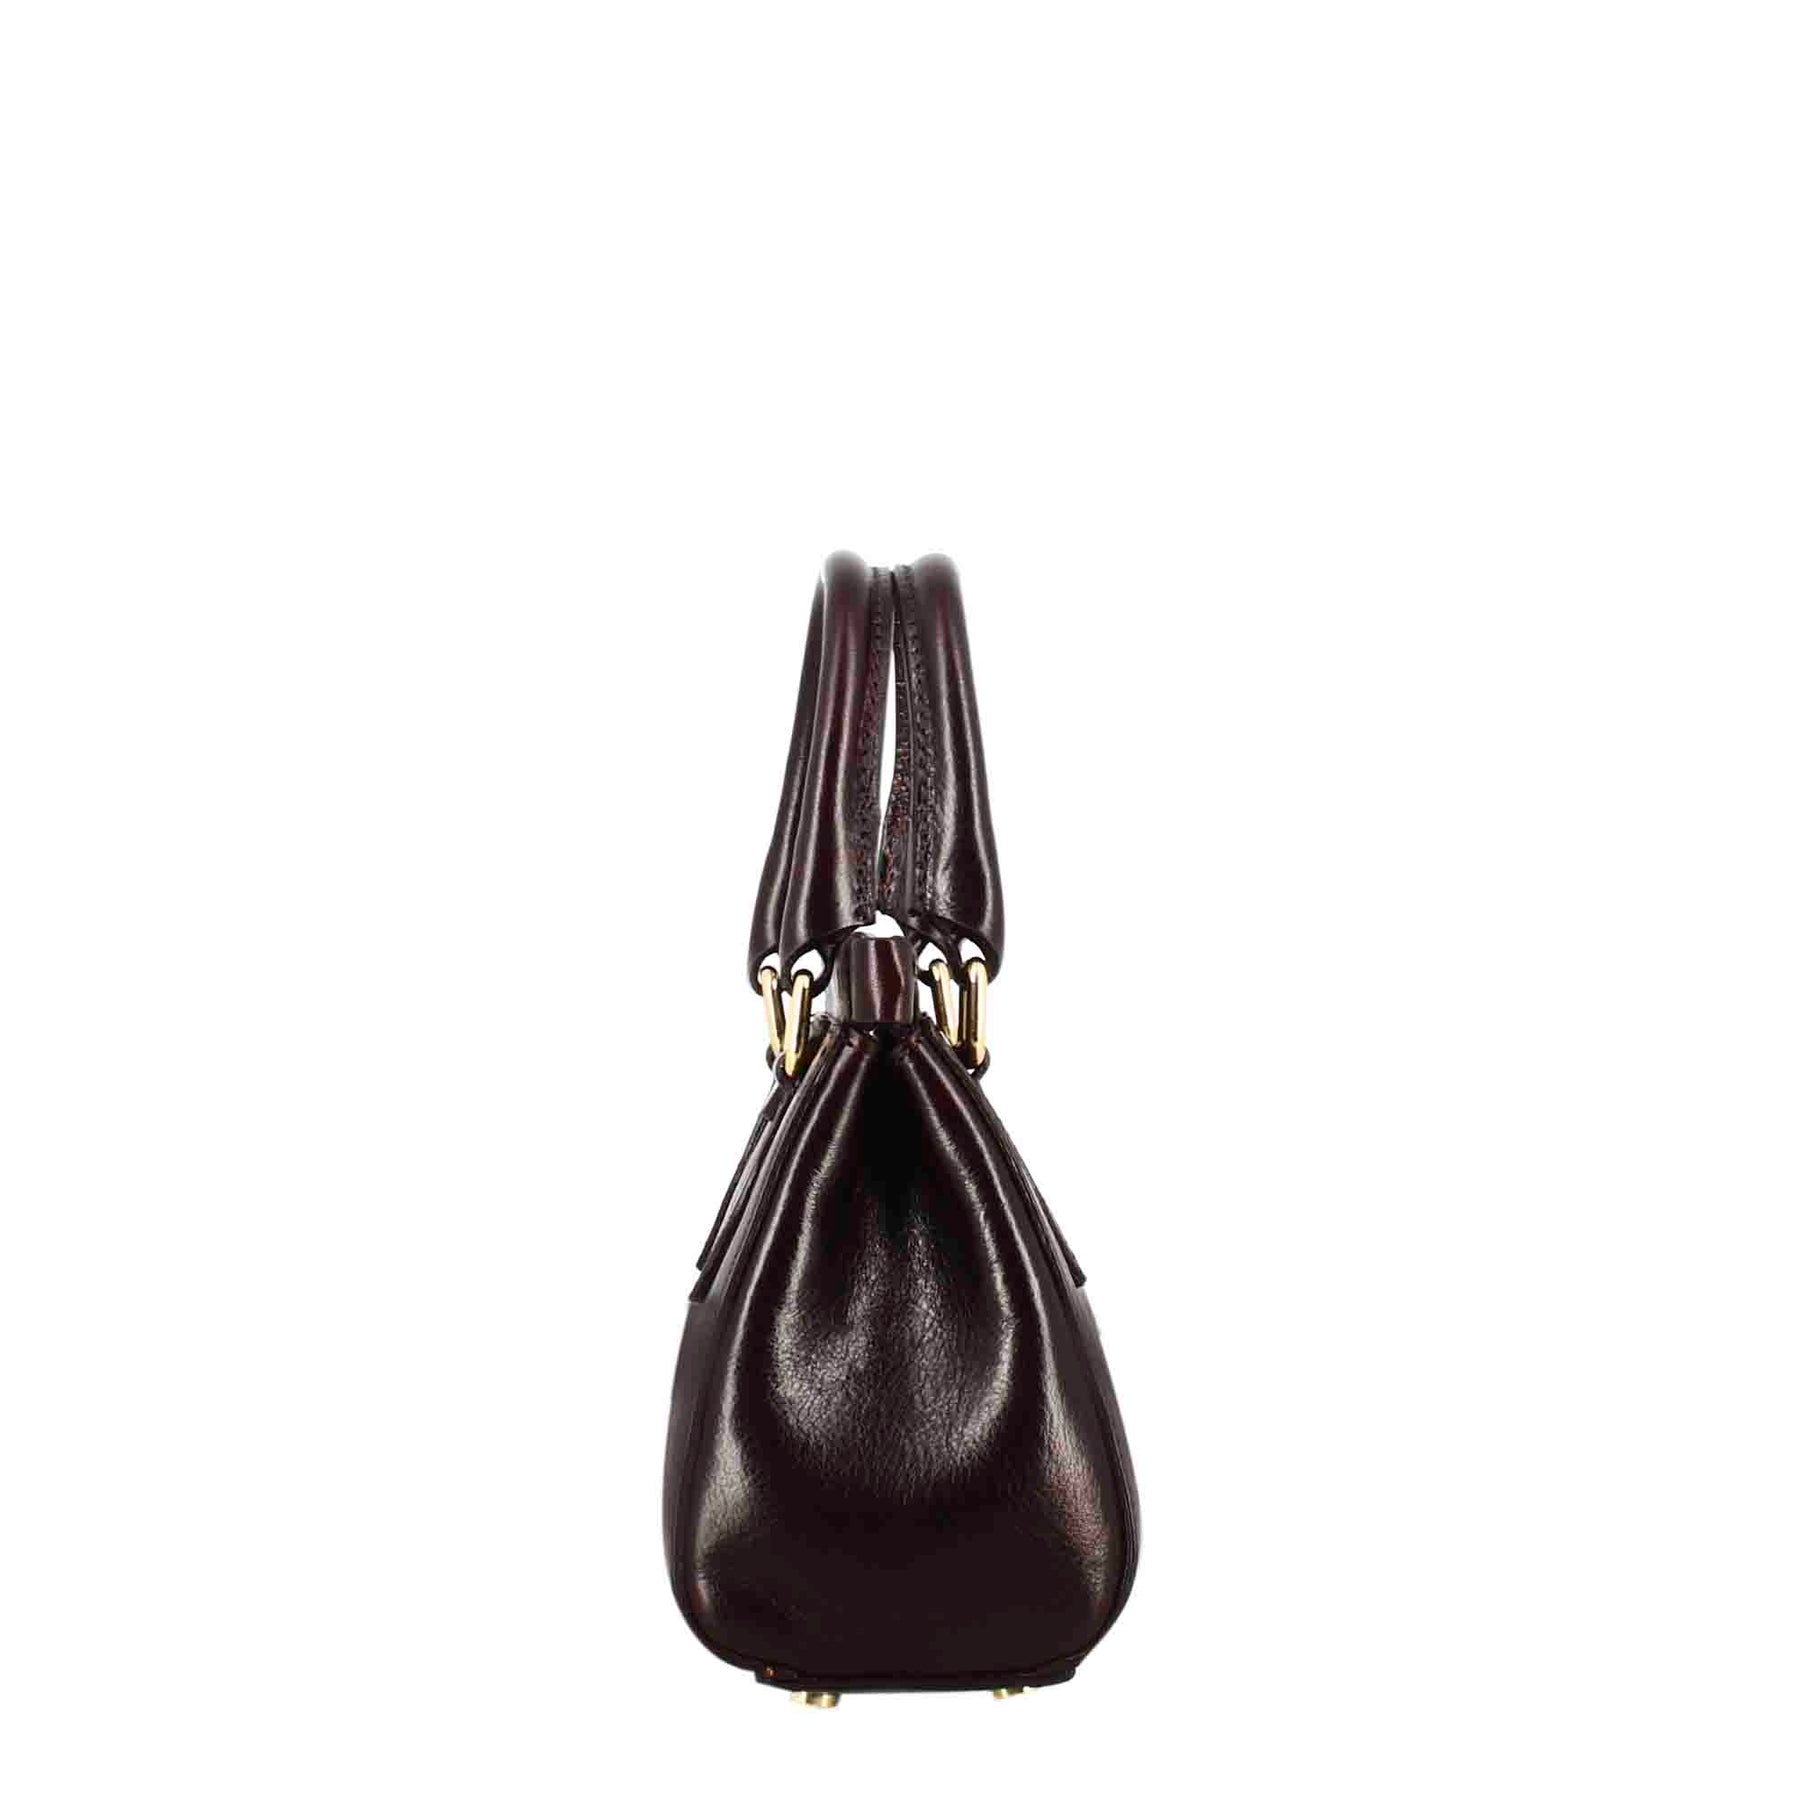 Fiorenza leather handbag with removable dark brown shoulder strap